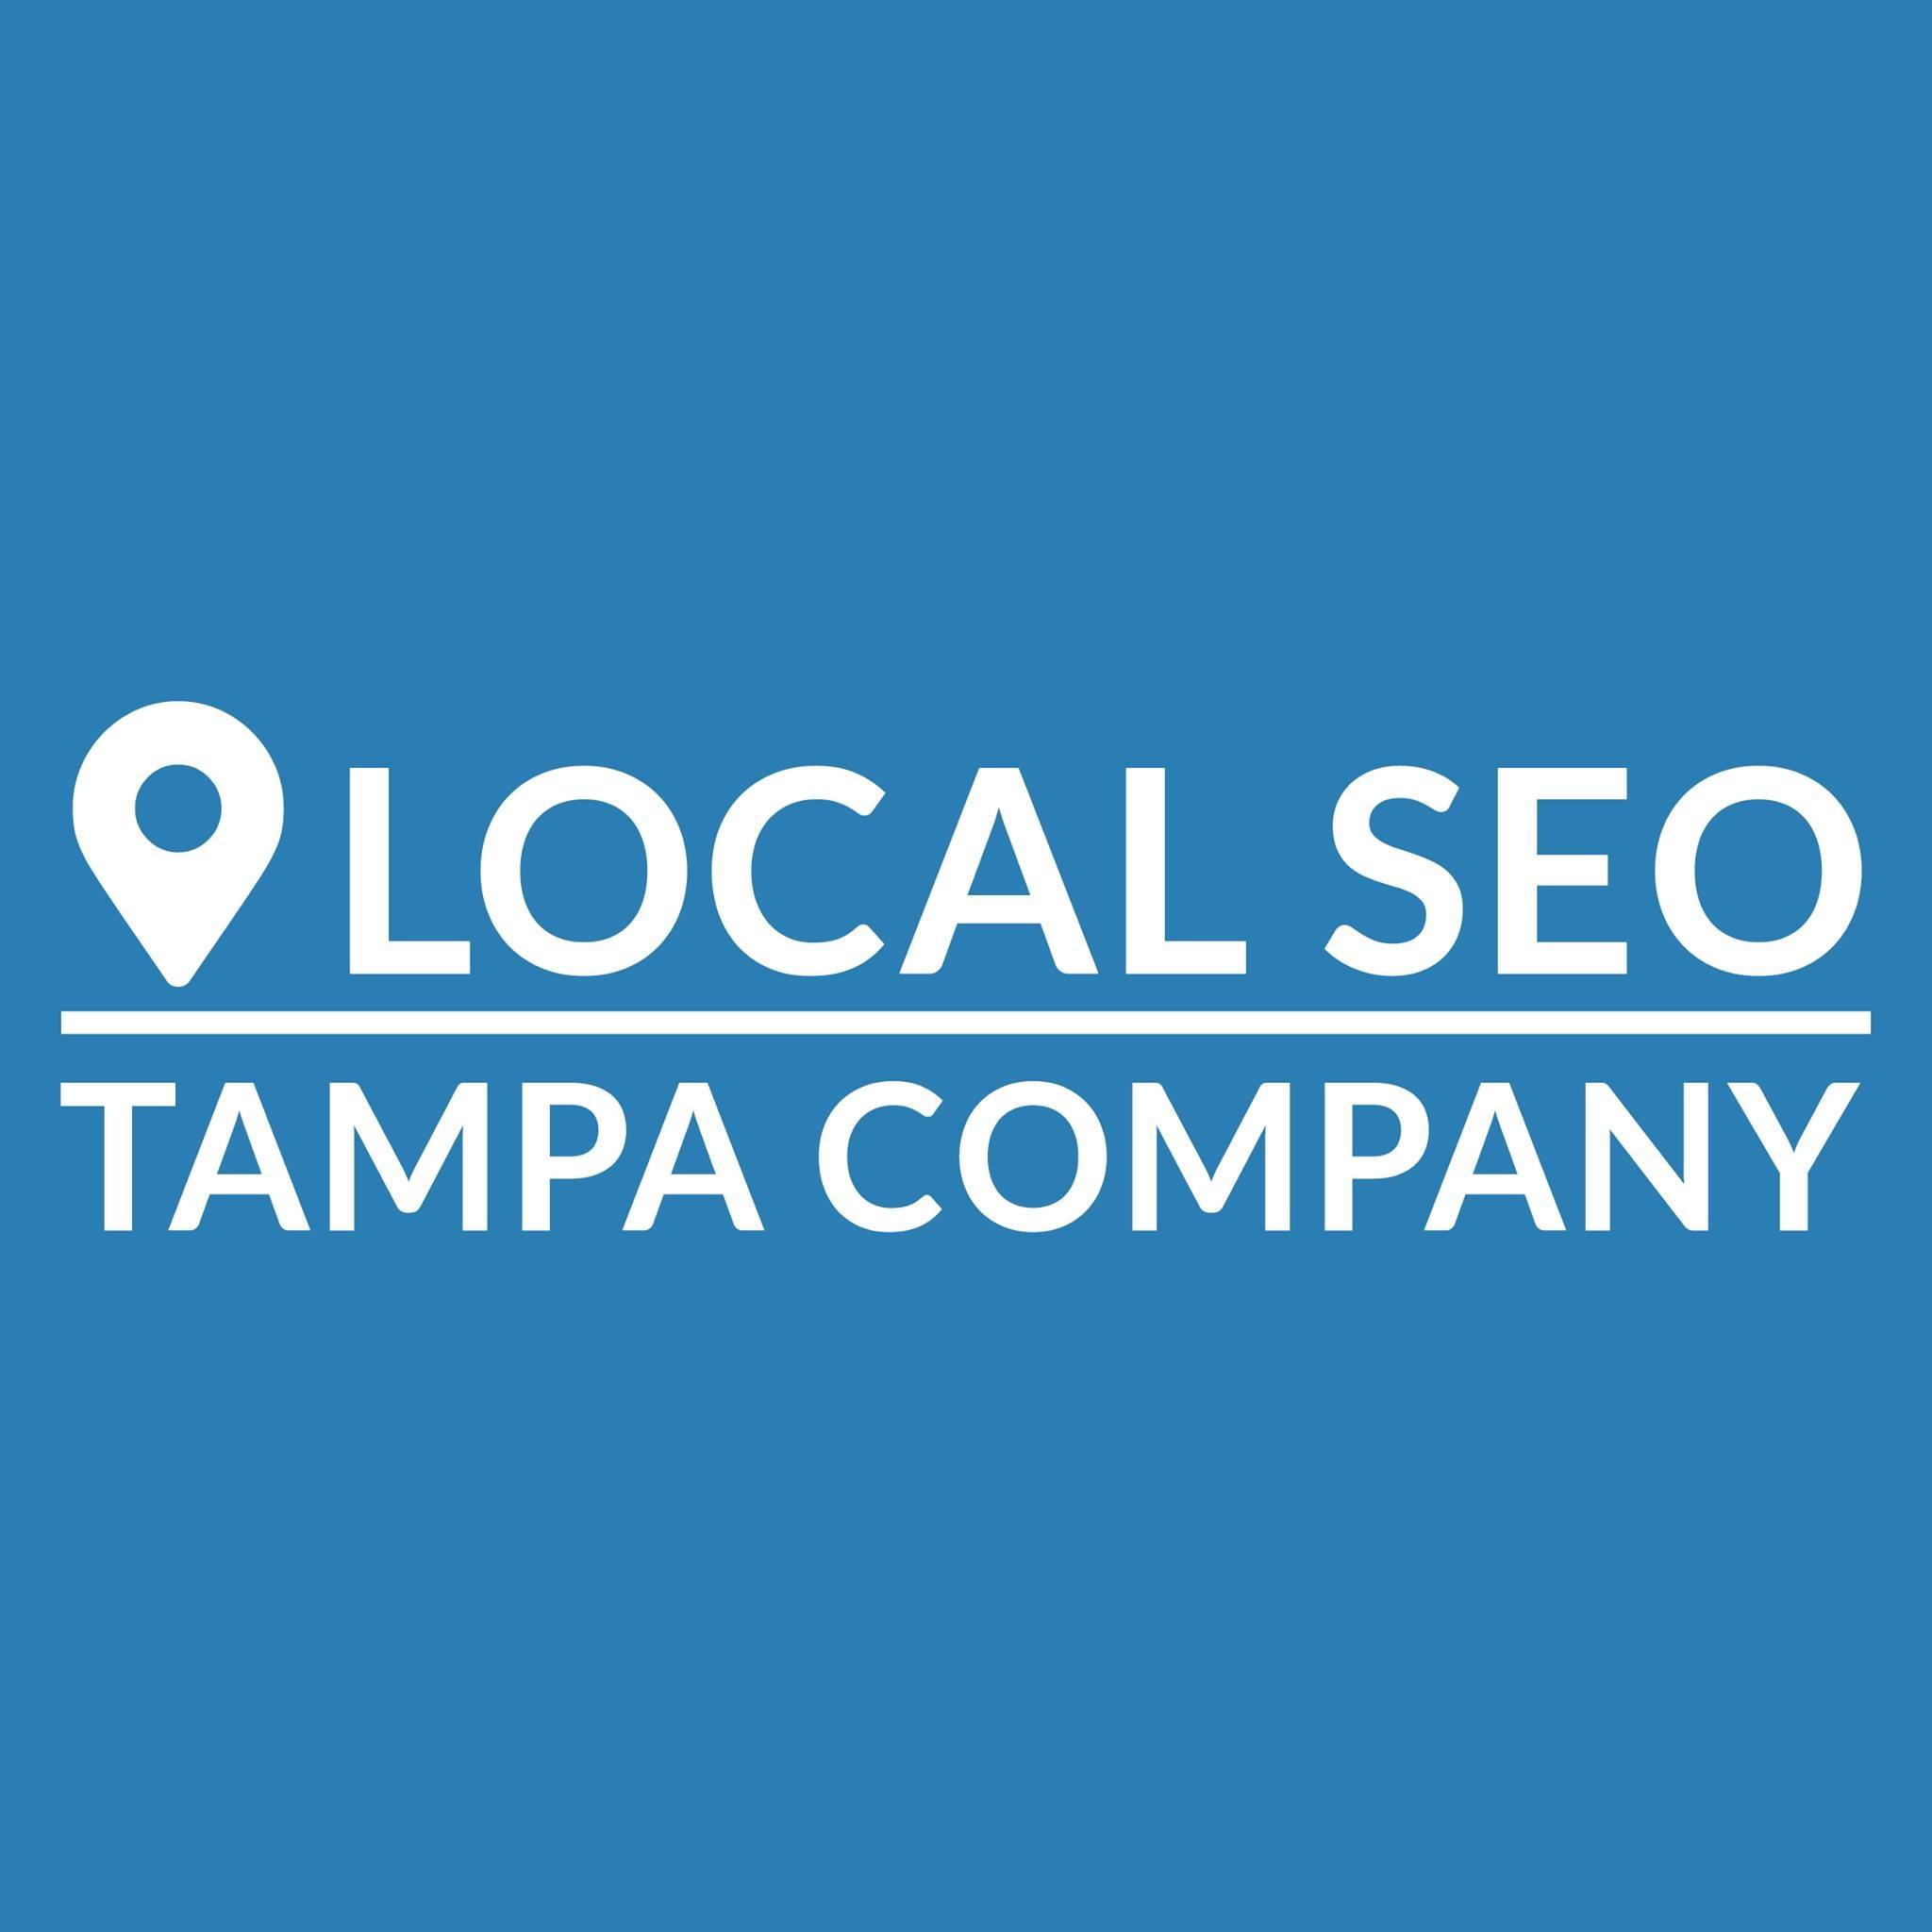 Local SEO Tampa Company